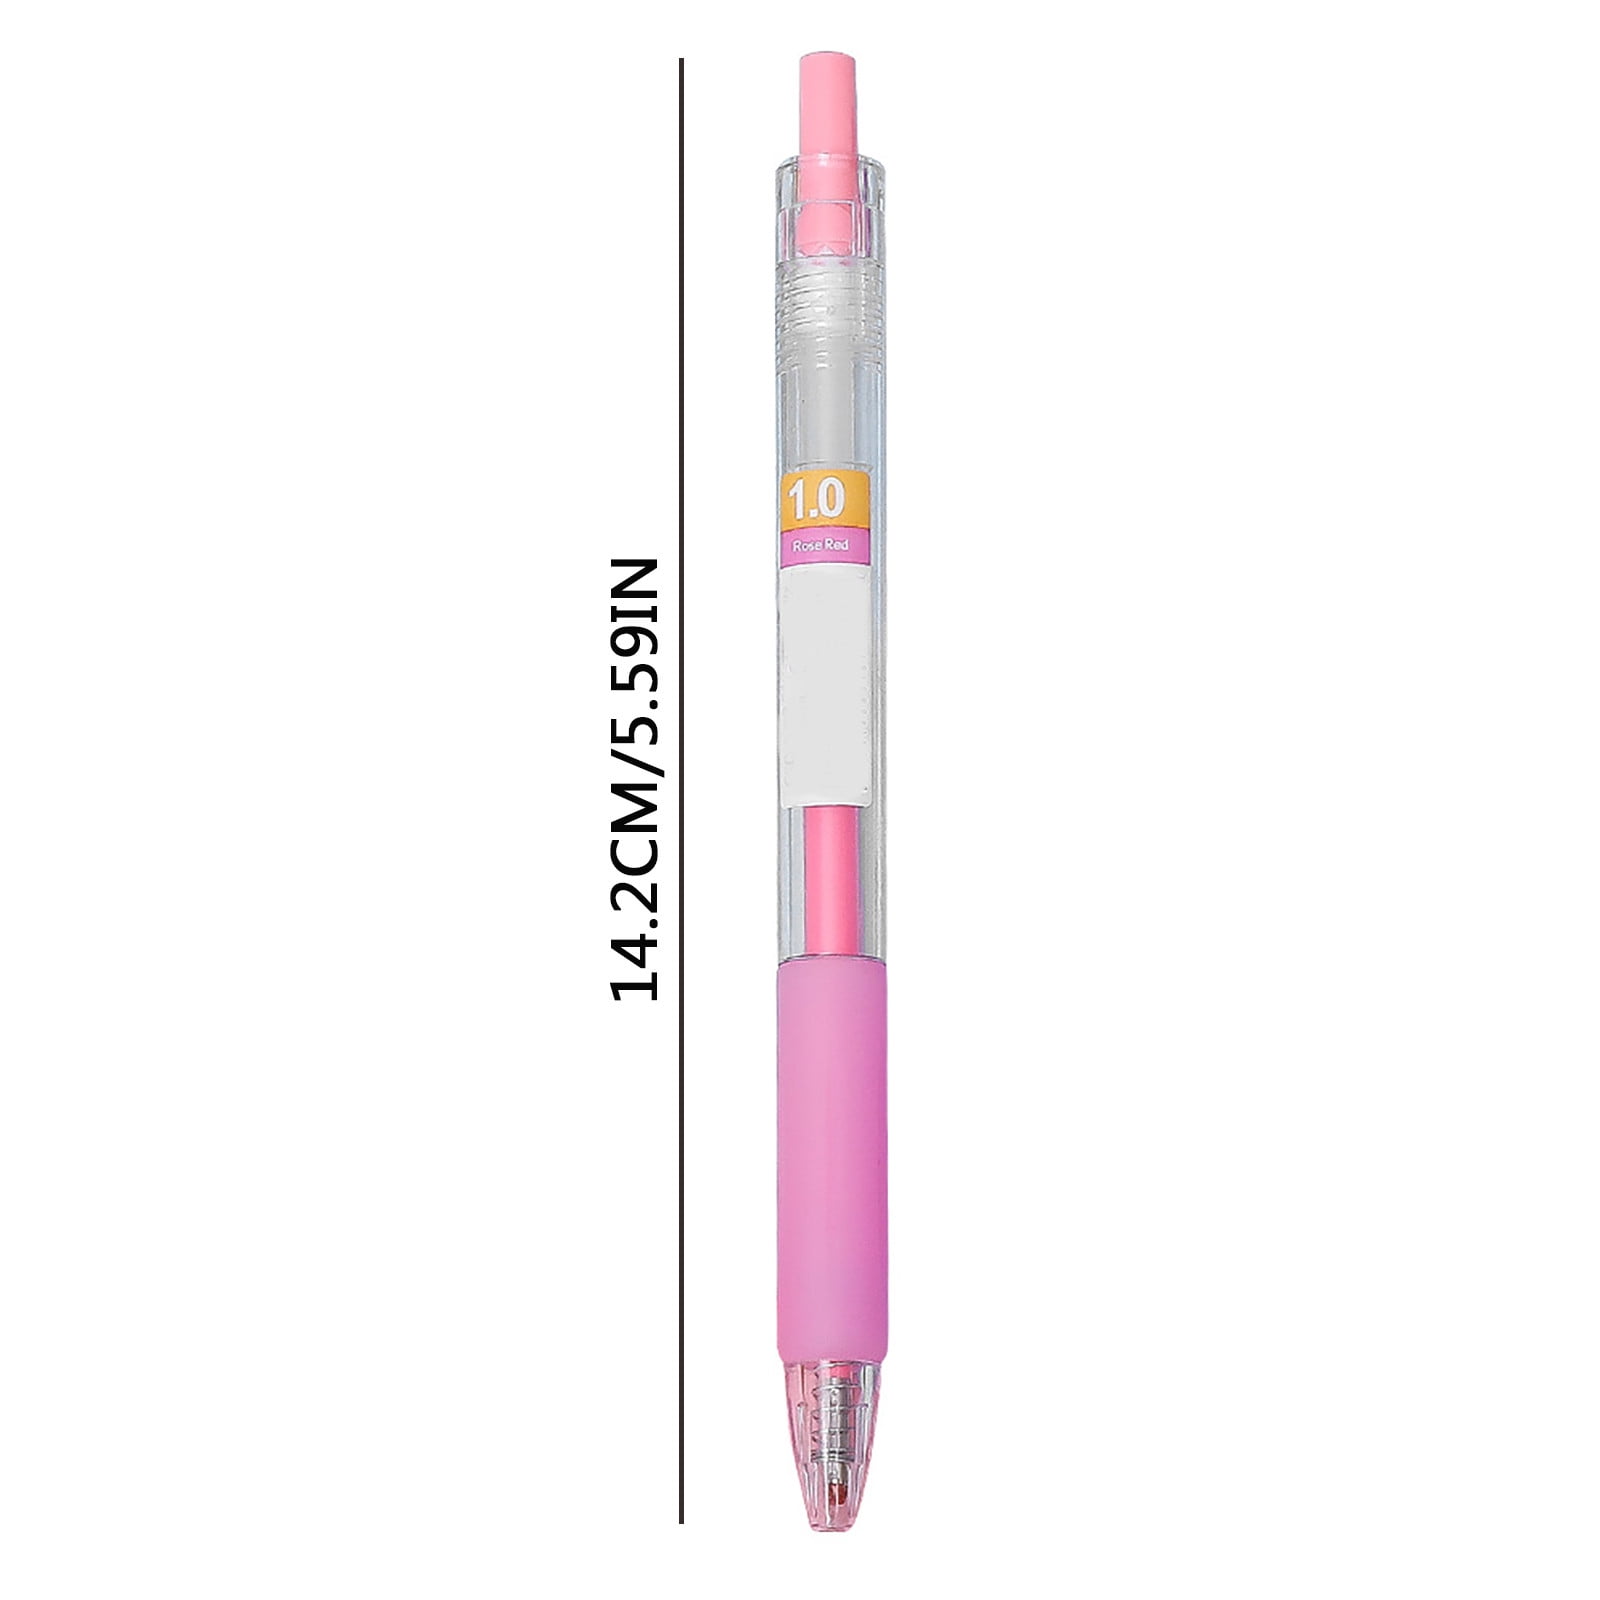  LASULEN 3D Jelly Pen, Magical Drawing Pens, 3D Glossy Jelly Pens,  3D Colorful Jelly Pen Set, Drawing Pens-12pcs : Office Products